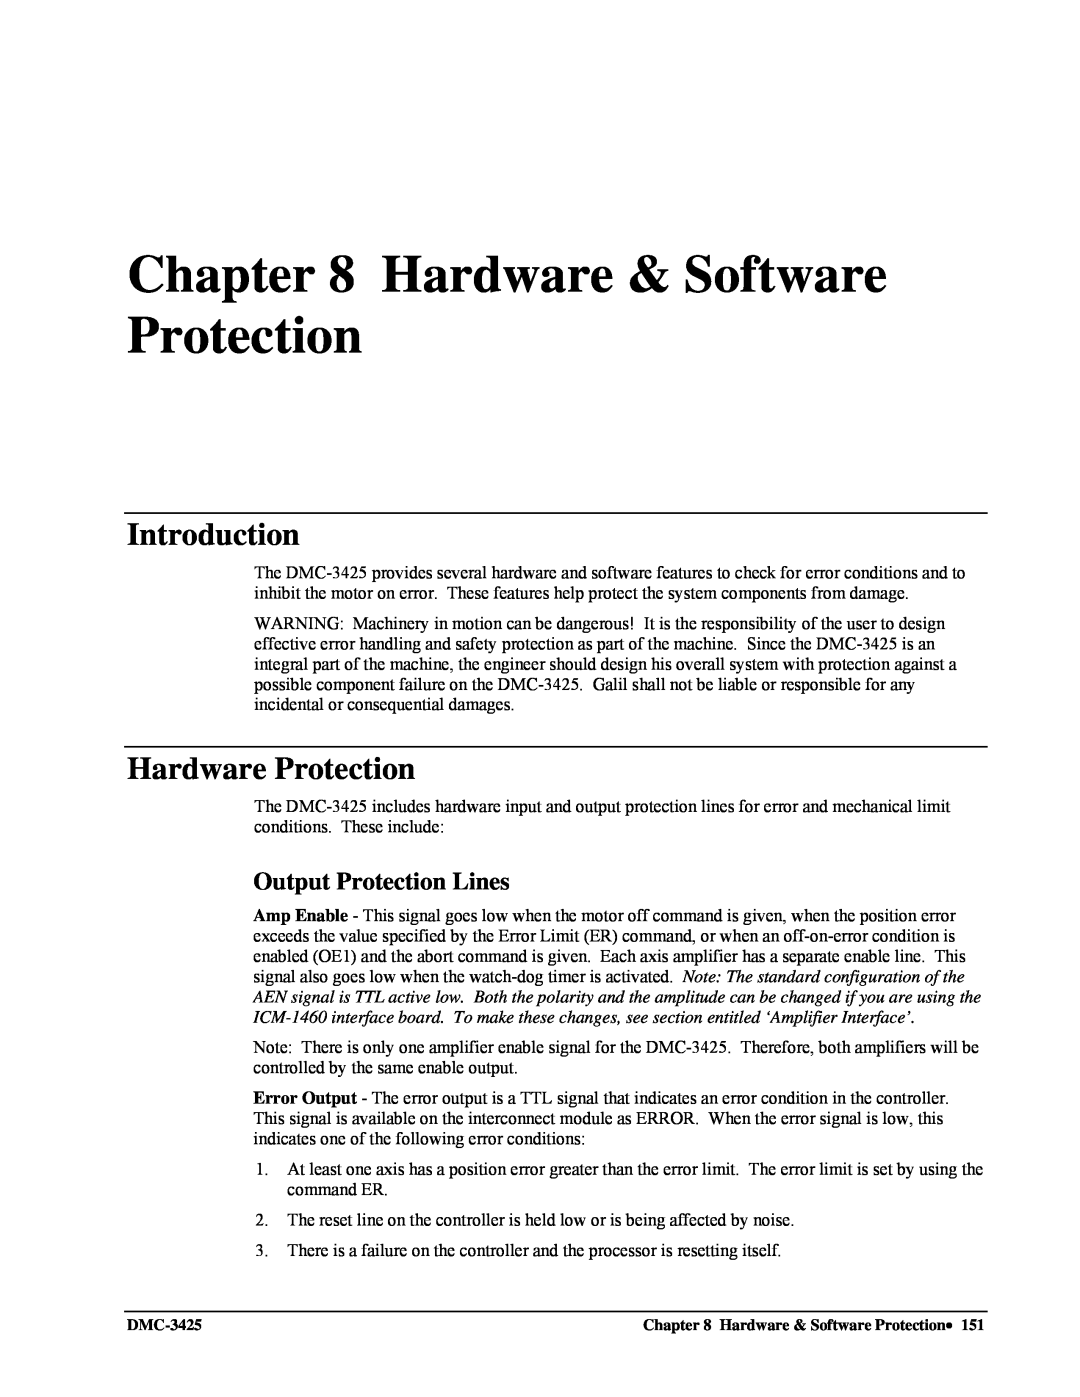 Galil DMC-3425 user manual Hardware & Software Protection, Hardware Protection, Output Protection Lines, Introduction 